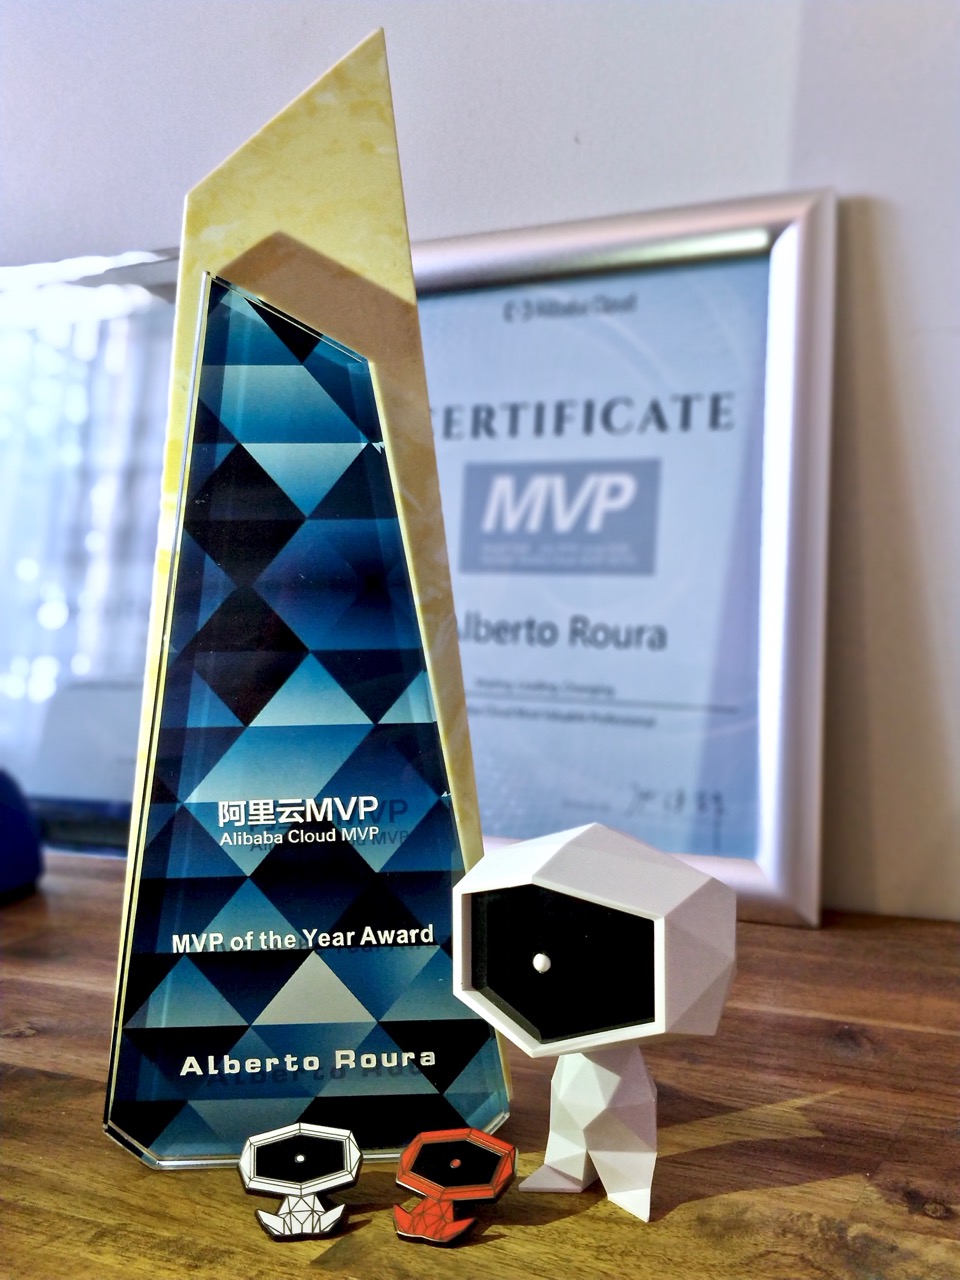 Alibaba Cloud MVP of the Year Award 2019